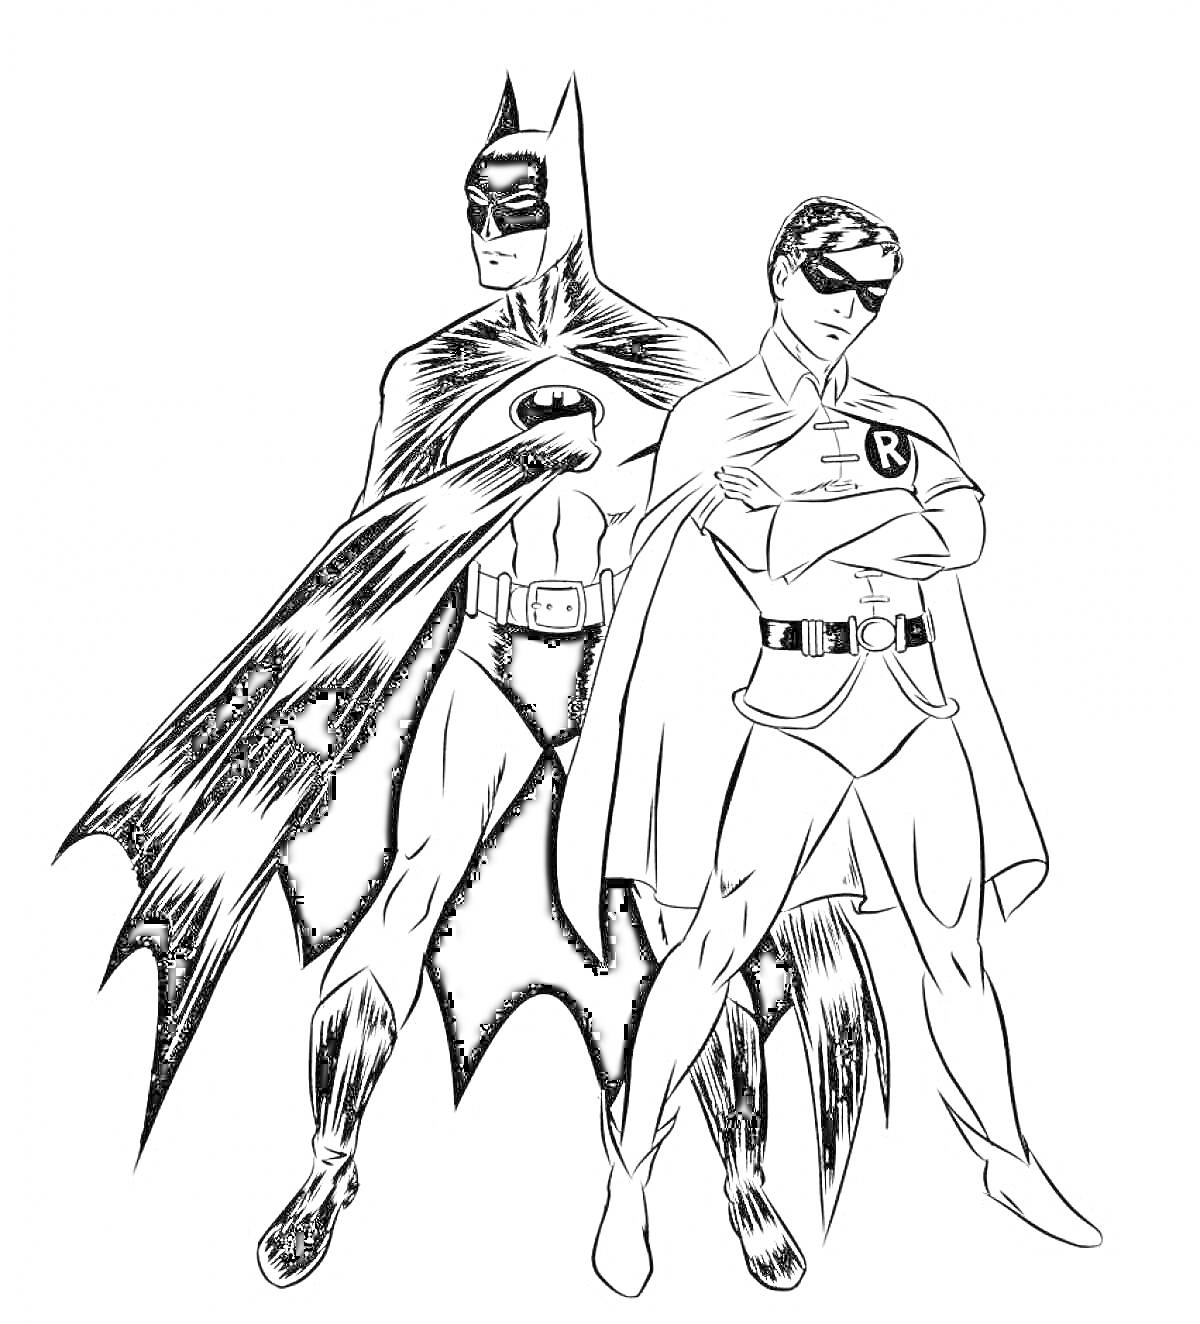 Раскраска Бэтмен и Робин стоят рядом, костюмы с плащами, маски на лицах